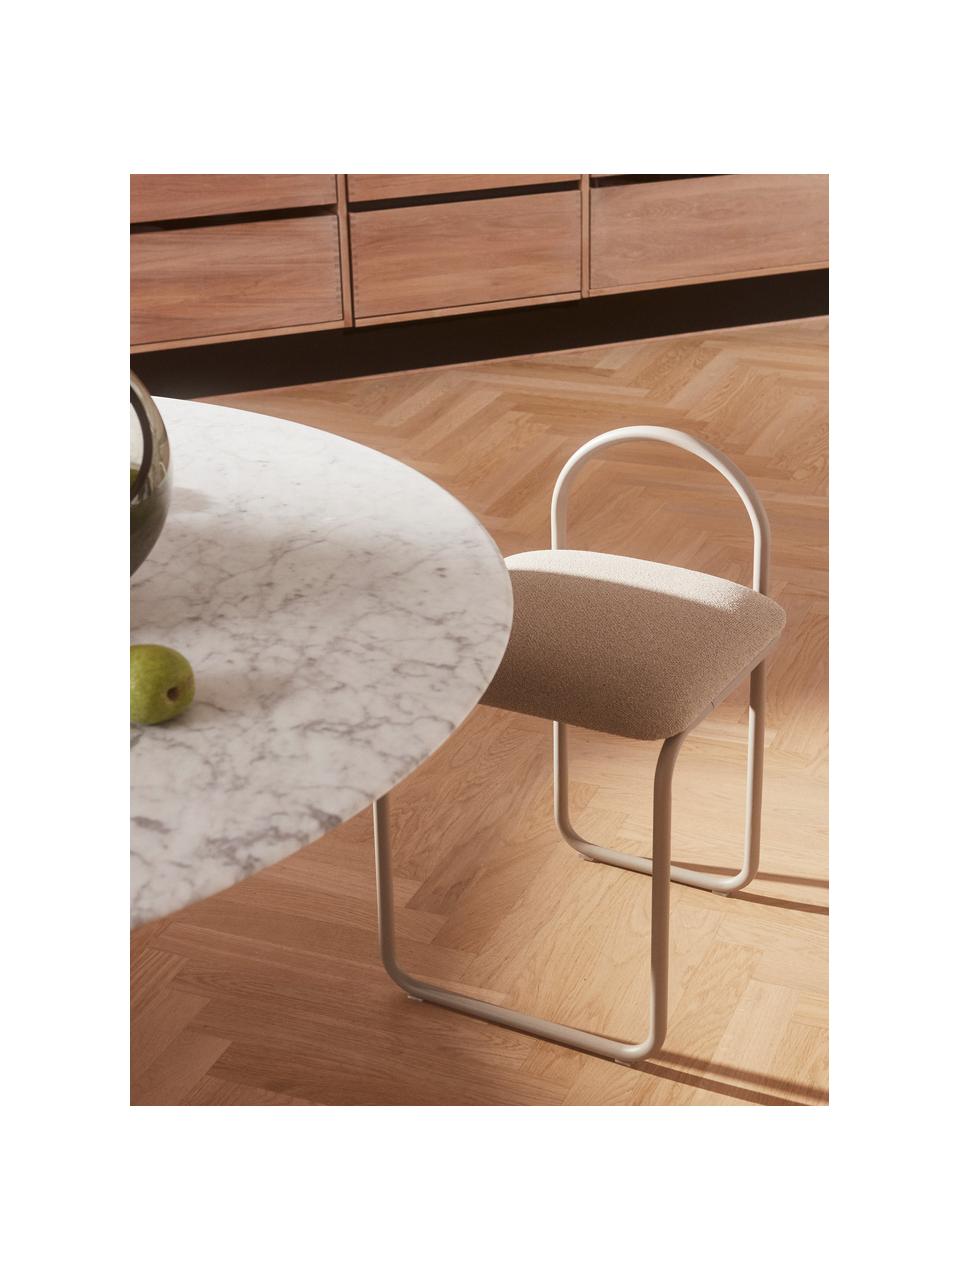 Kovová židle Angui, Béžová, Š 37 cm, H 39 cm